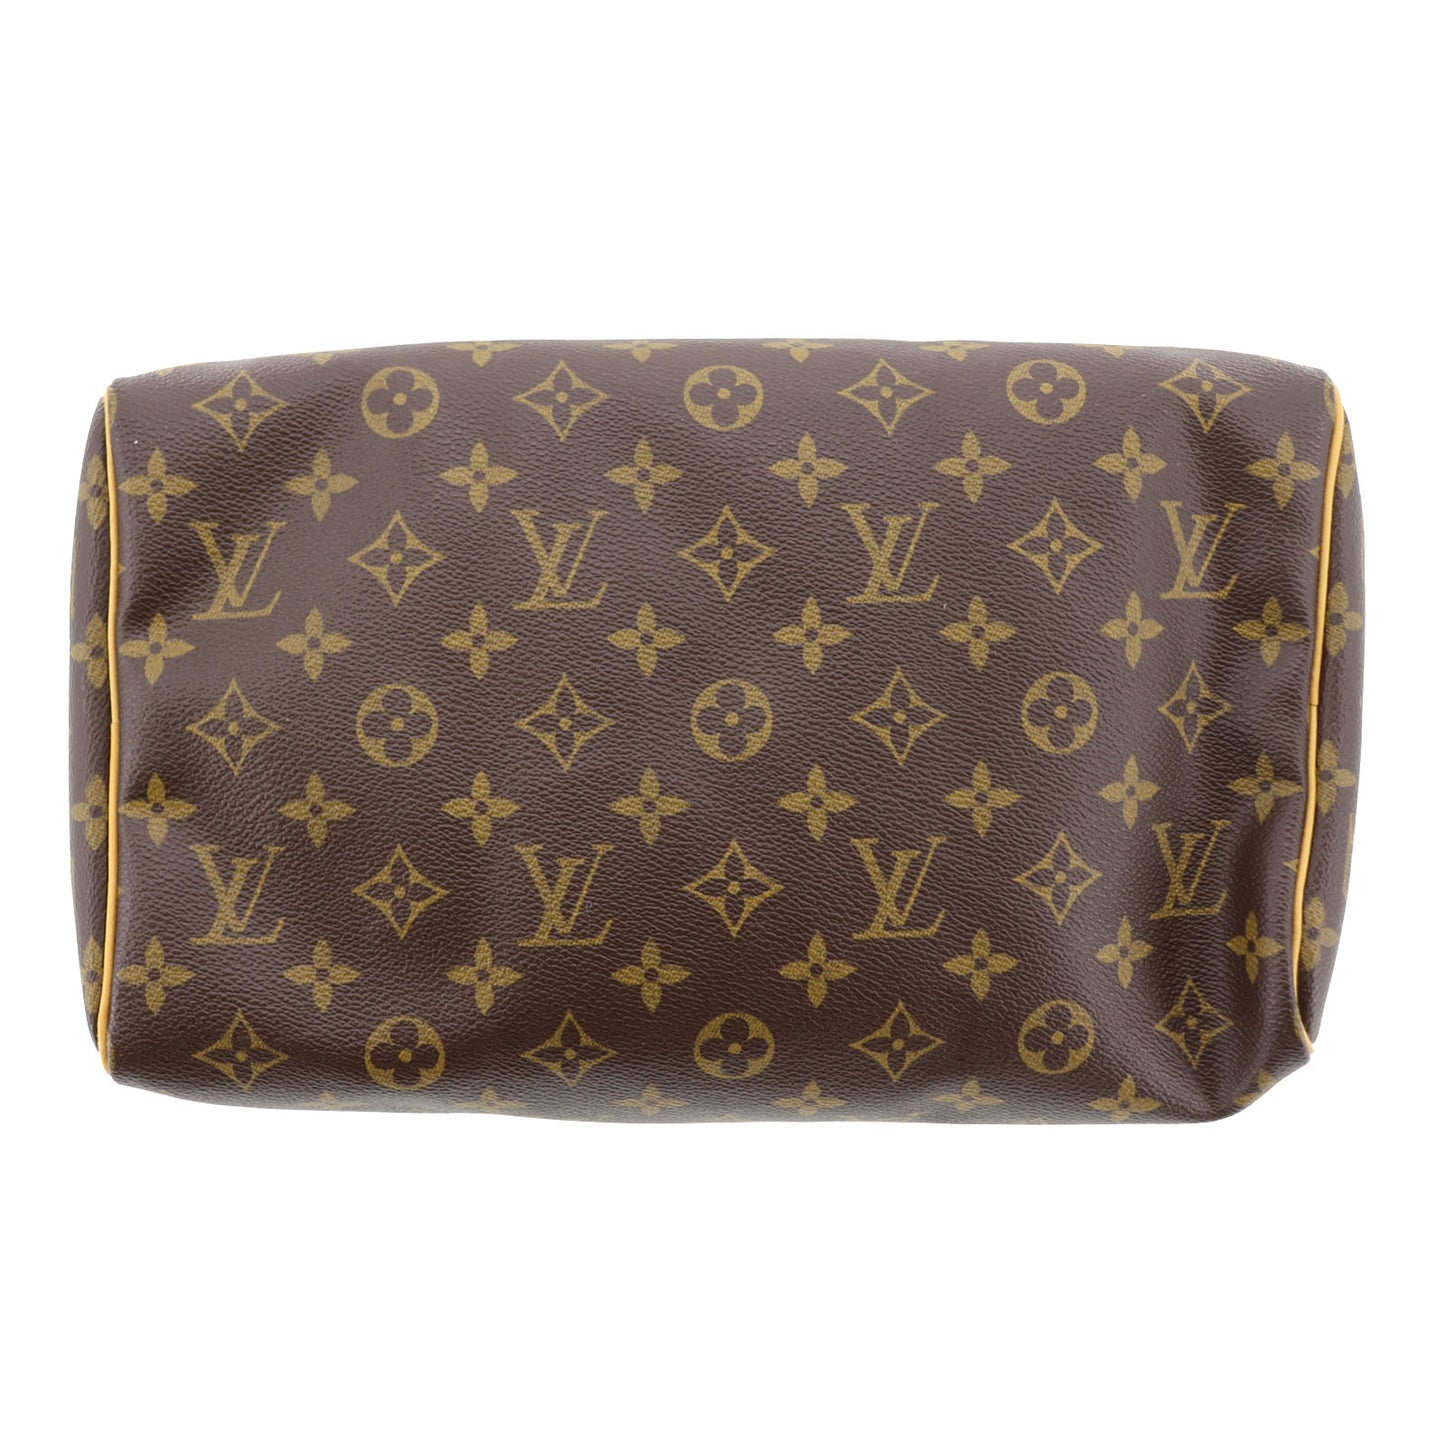 Louis Vuitton Speedy 30 Handbag Monogram Leather M41526 #AG976